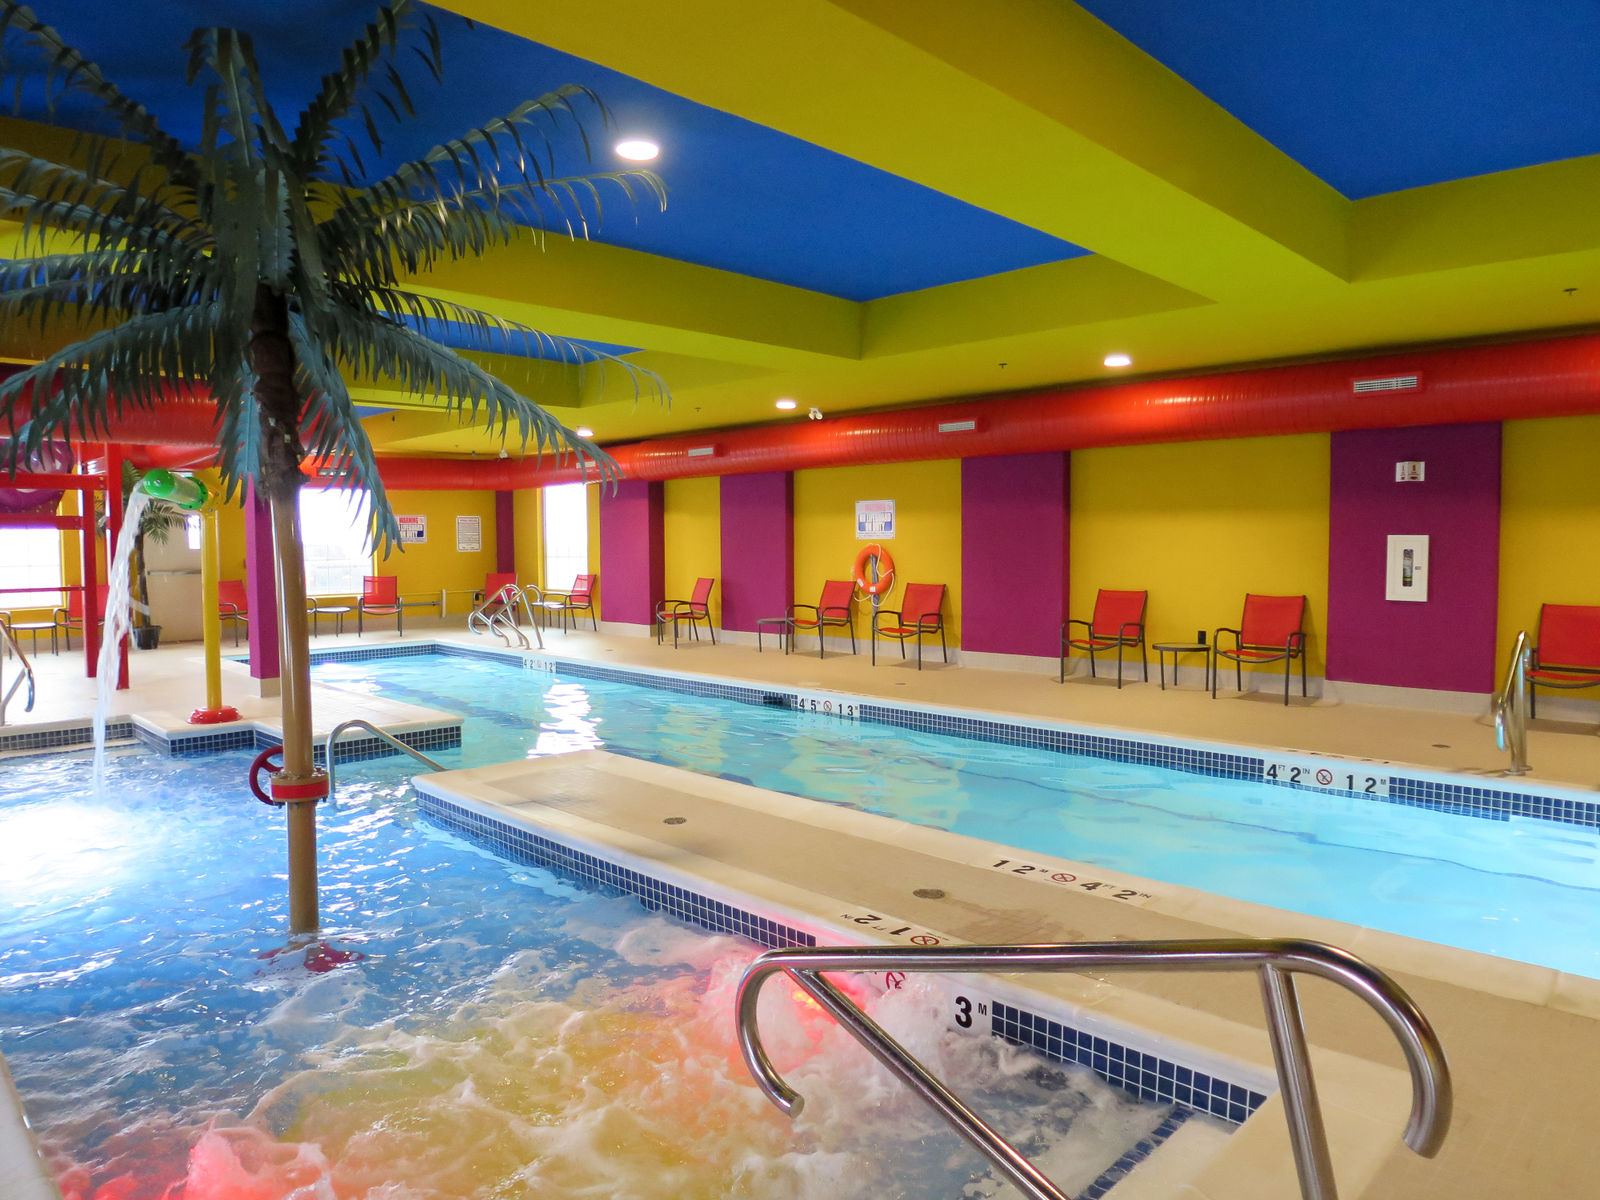 Families enjoy getting away to the Comfort Suites Regina Hotel for its incredible indoor waterpark.